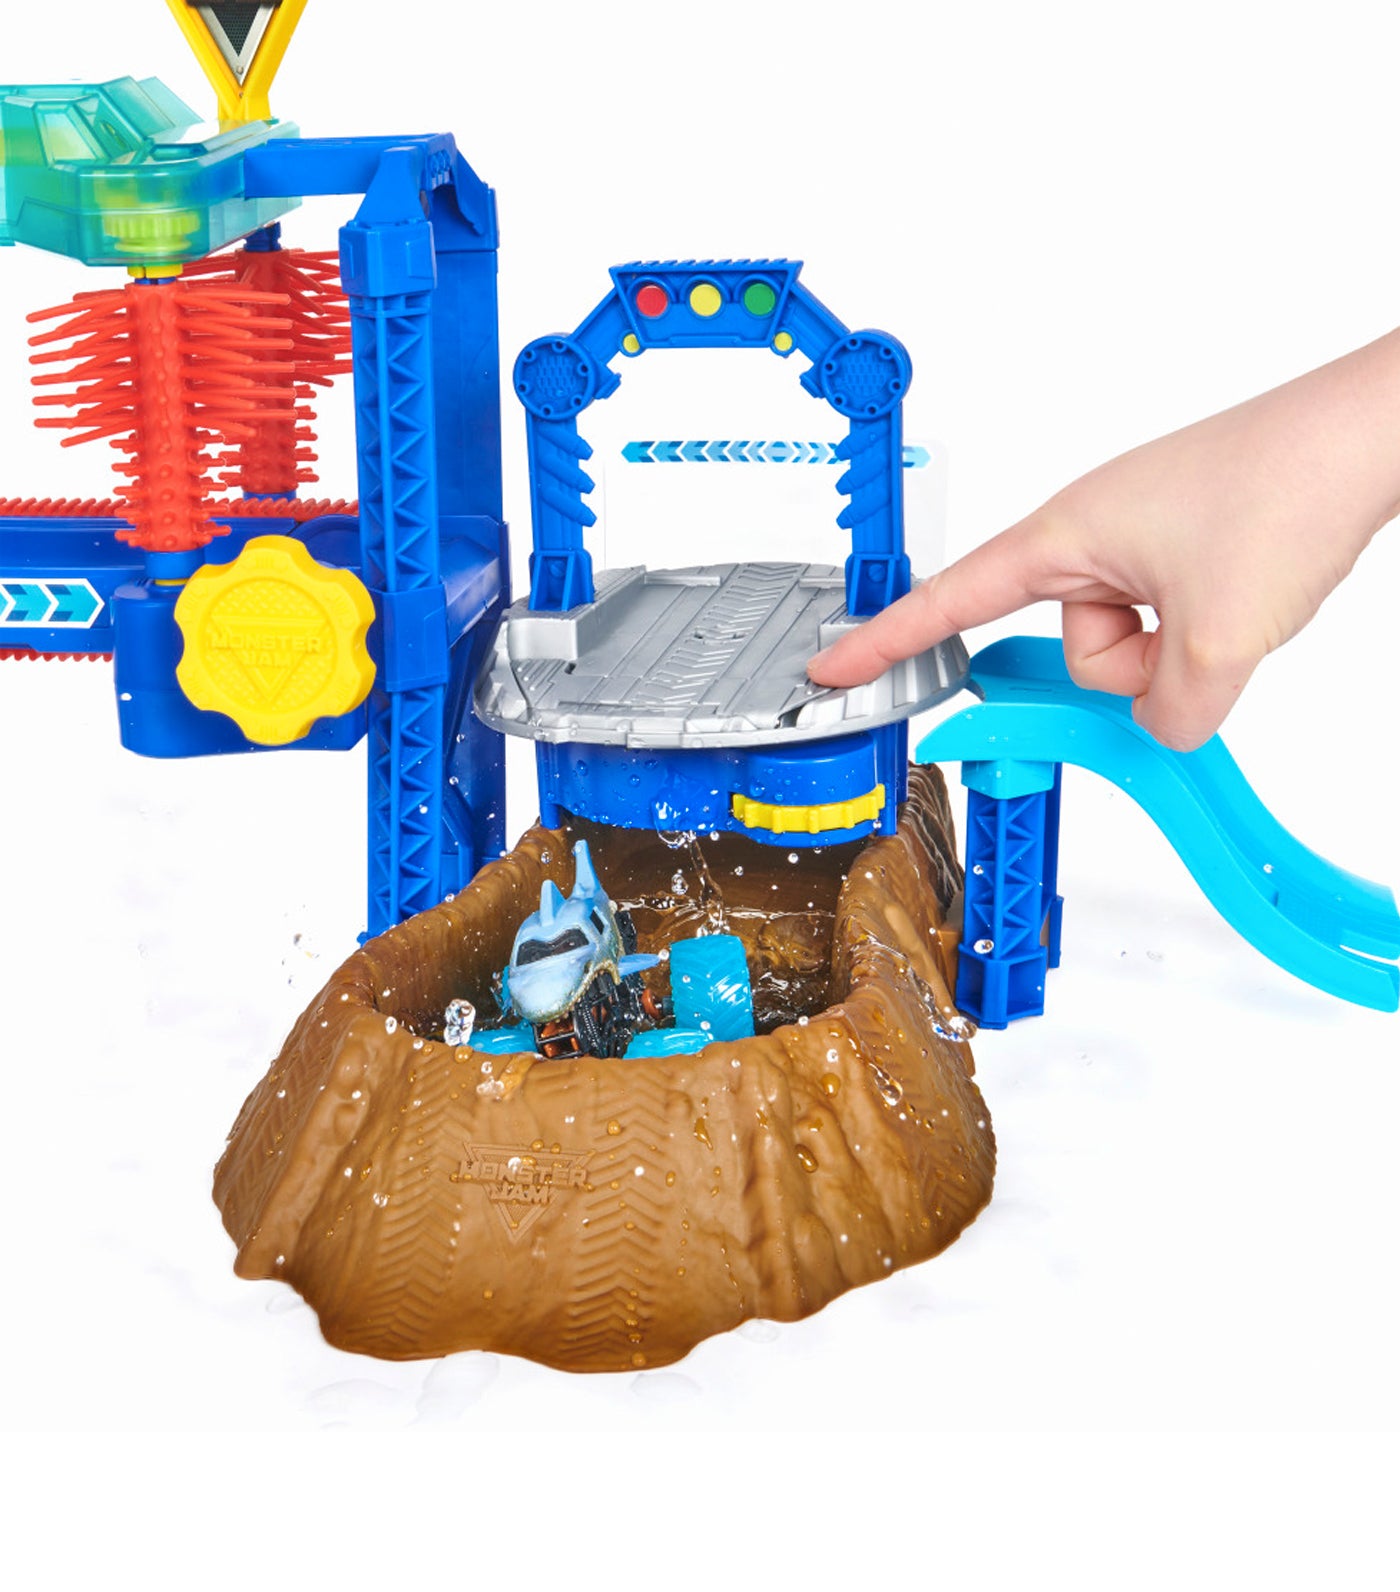 Megalodon Monster Wash - Car Wash Playset